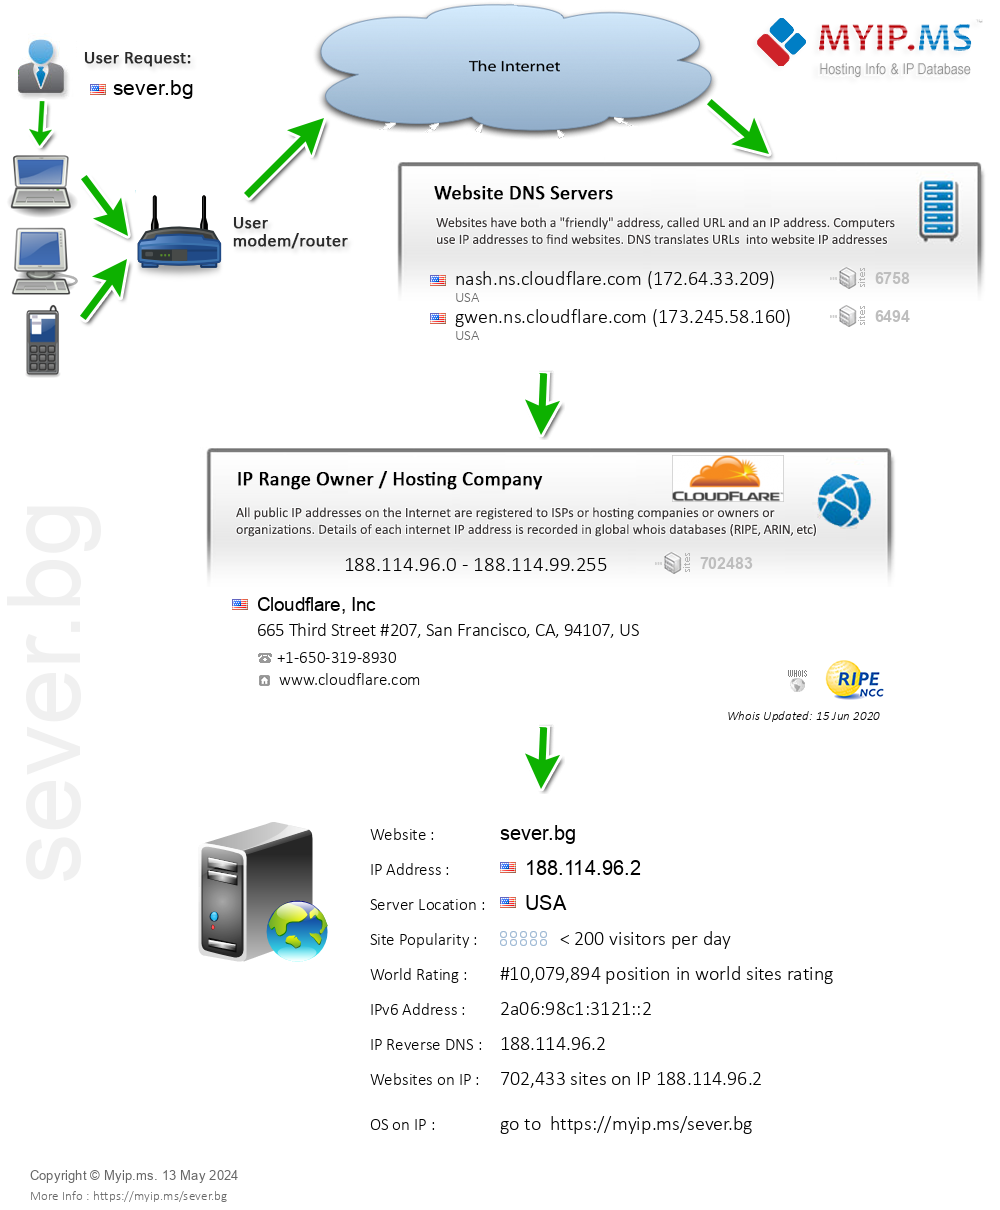 Sever.bg - Website Hosting Visual IP Diagram